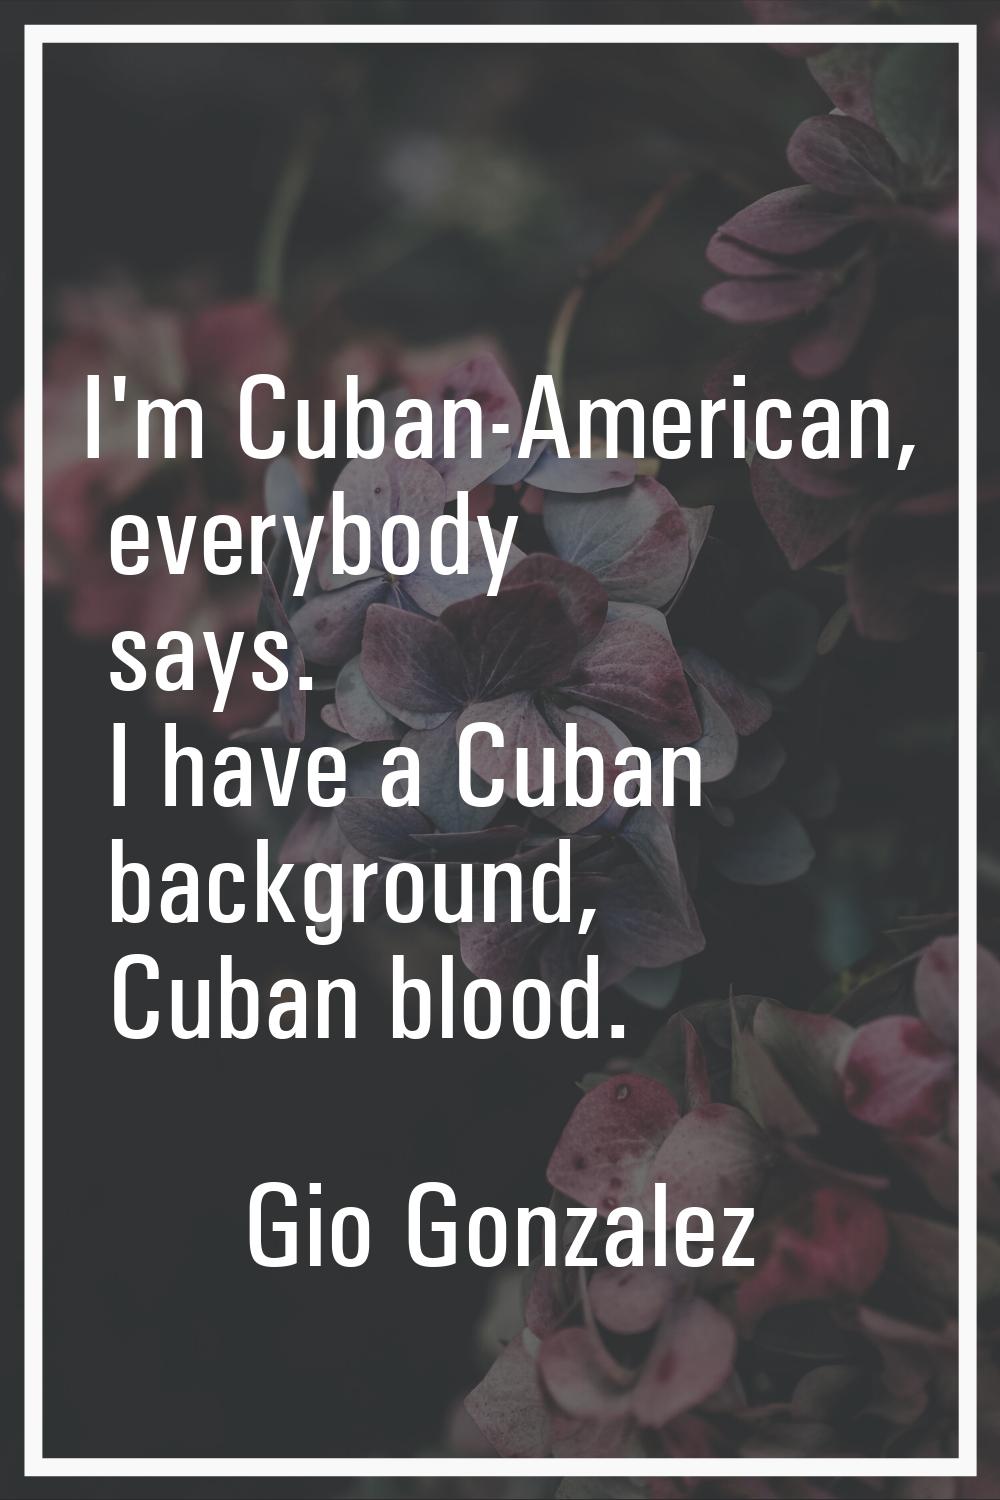 I'm Cuban-American, everybody says. I have a Cuban background, Cuban blood.